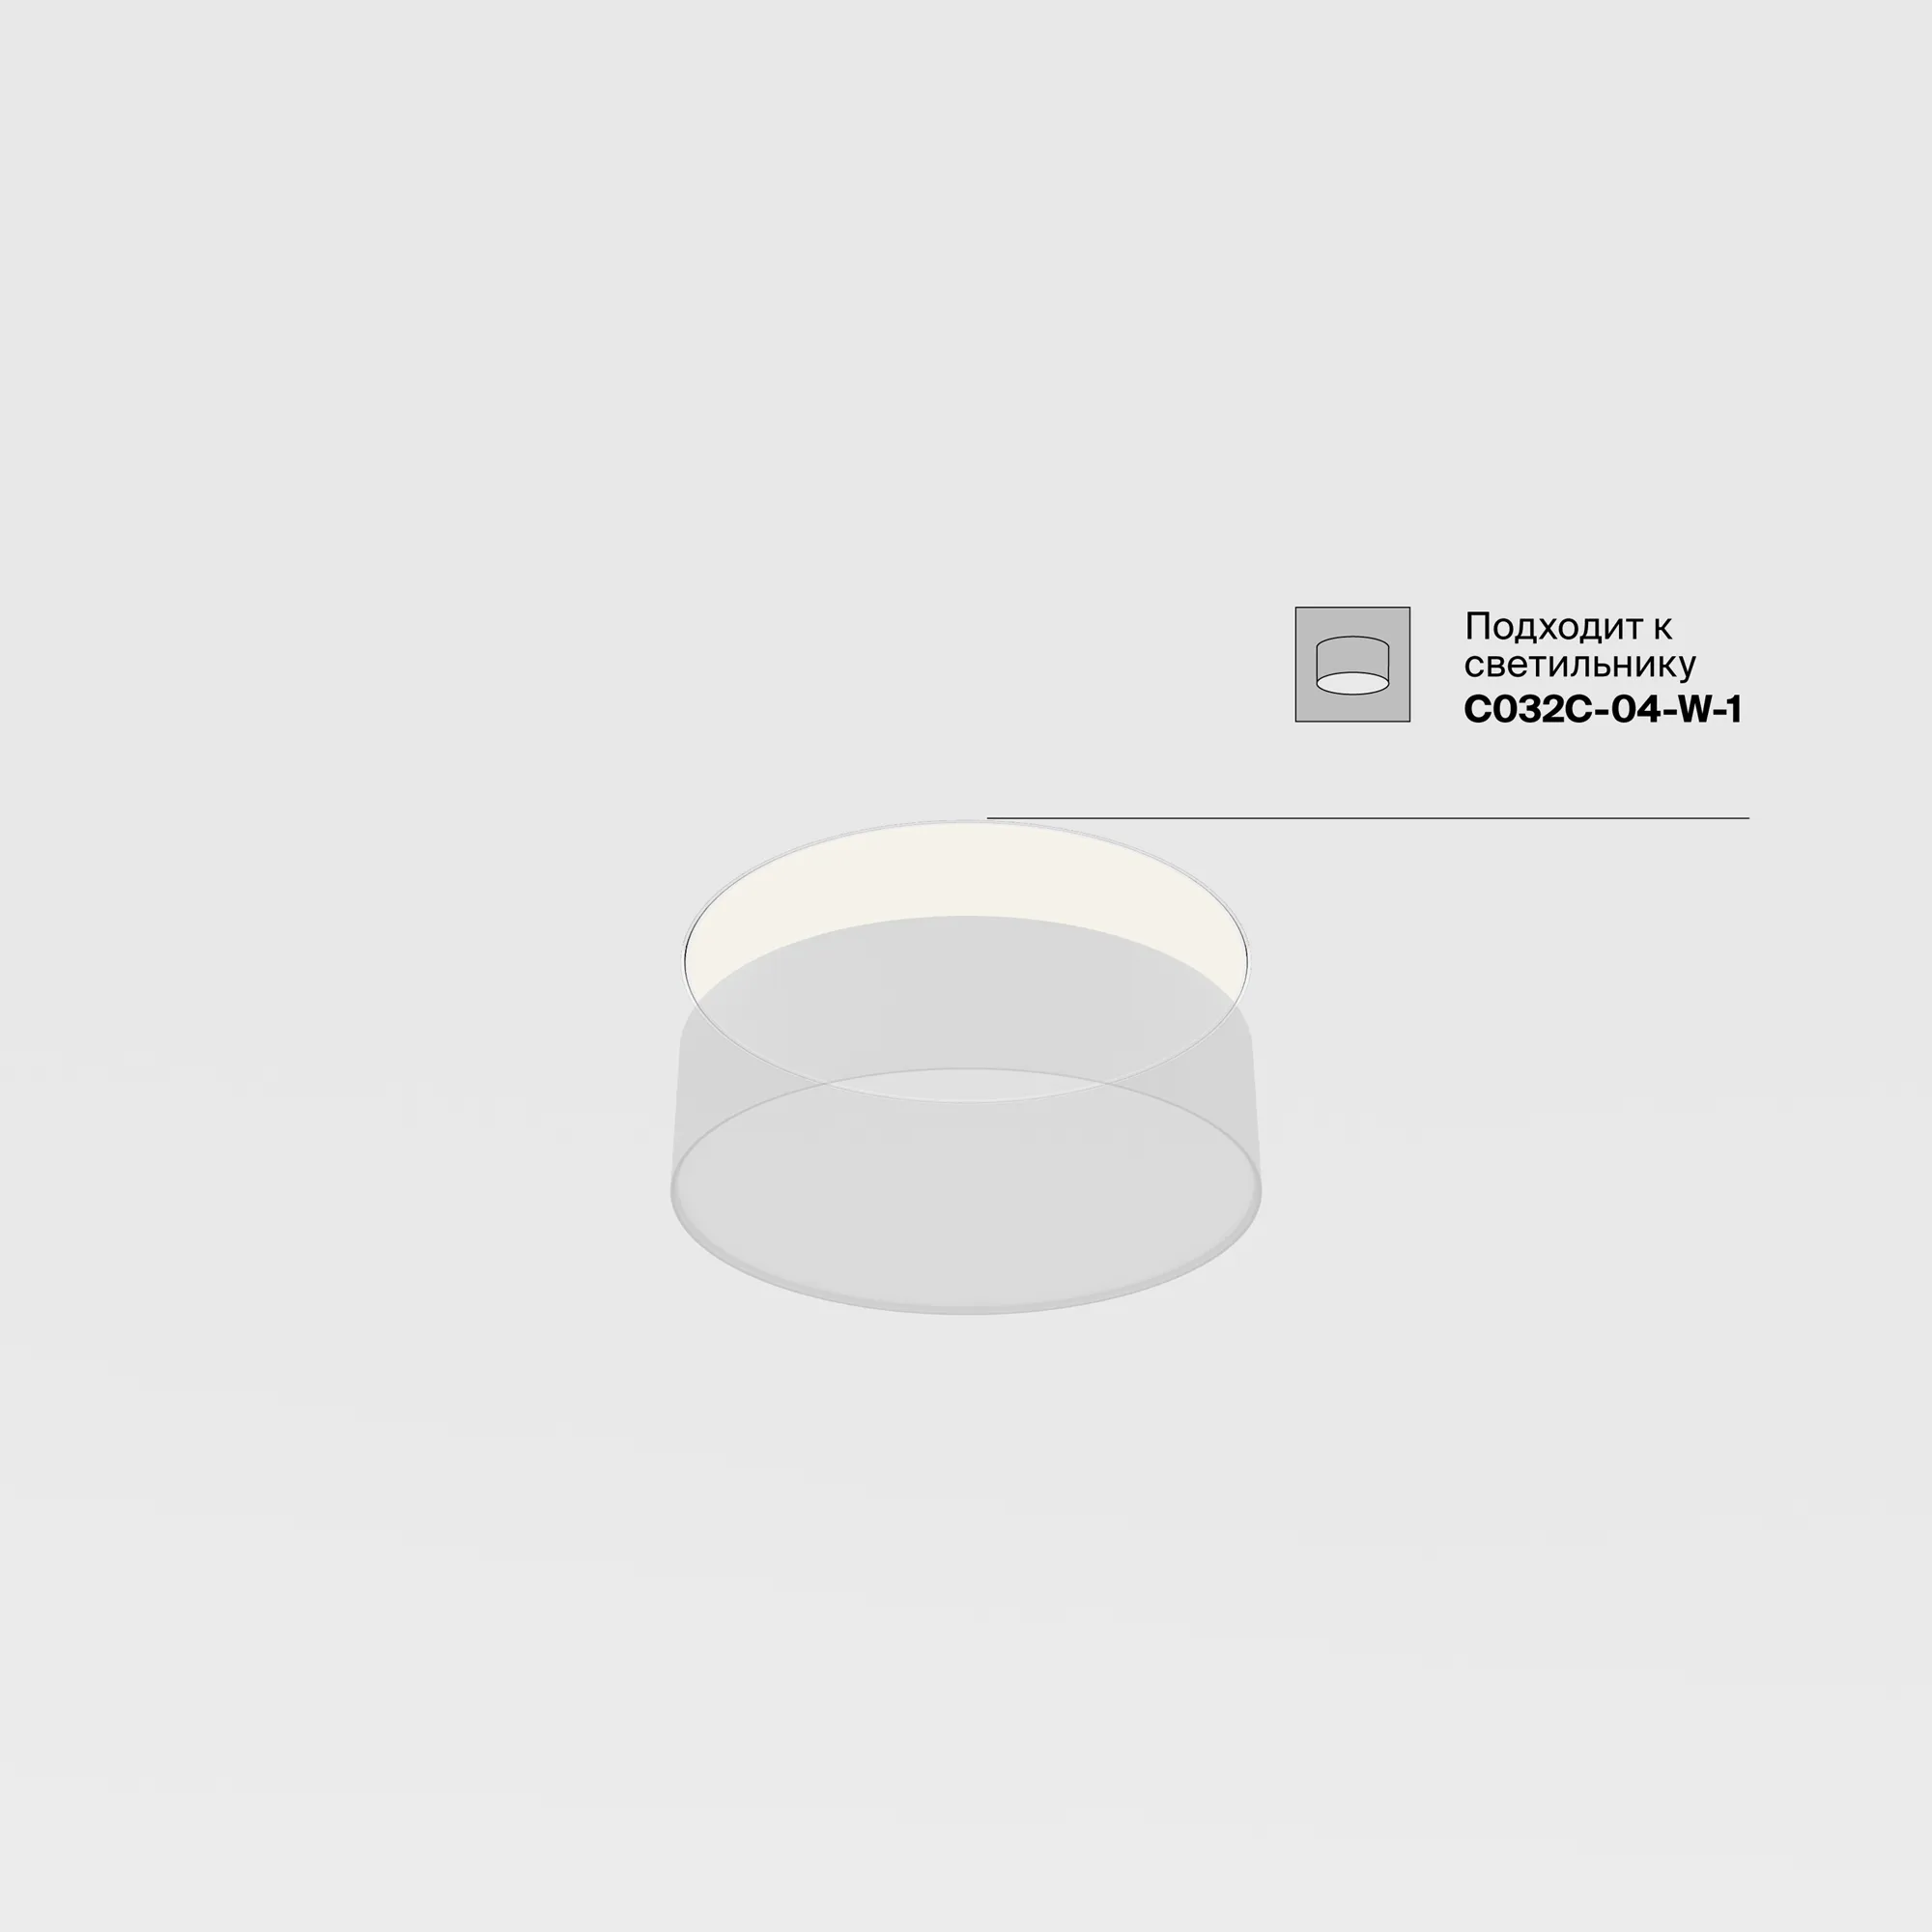 Аксессуар для встраиваемого светильника Maytoni Accessories DLA032-TRS24-W